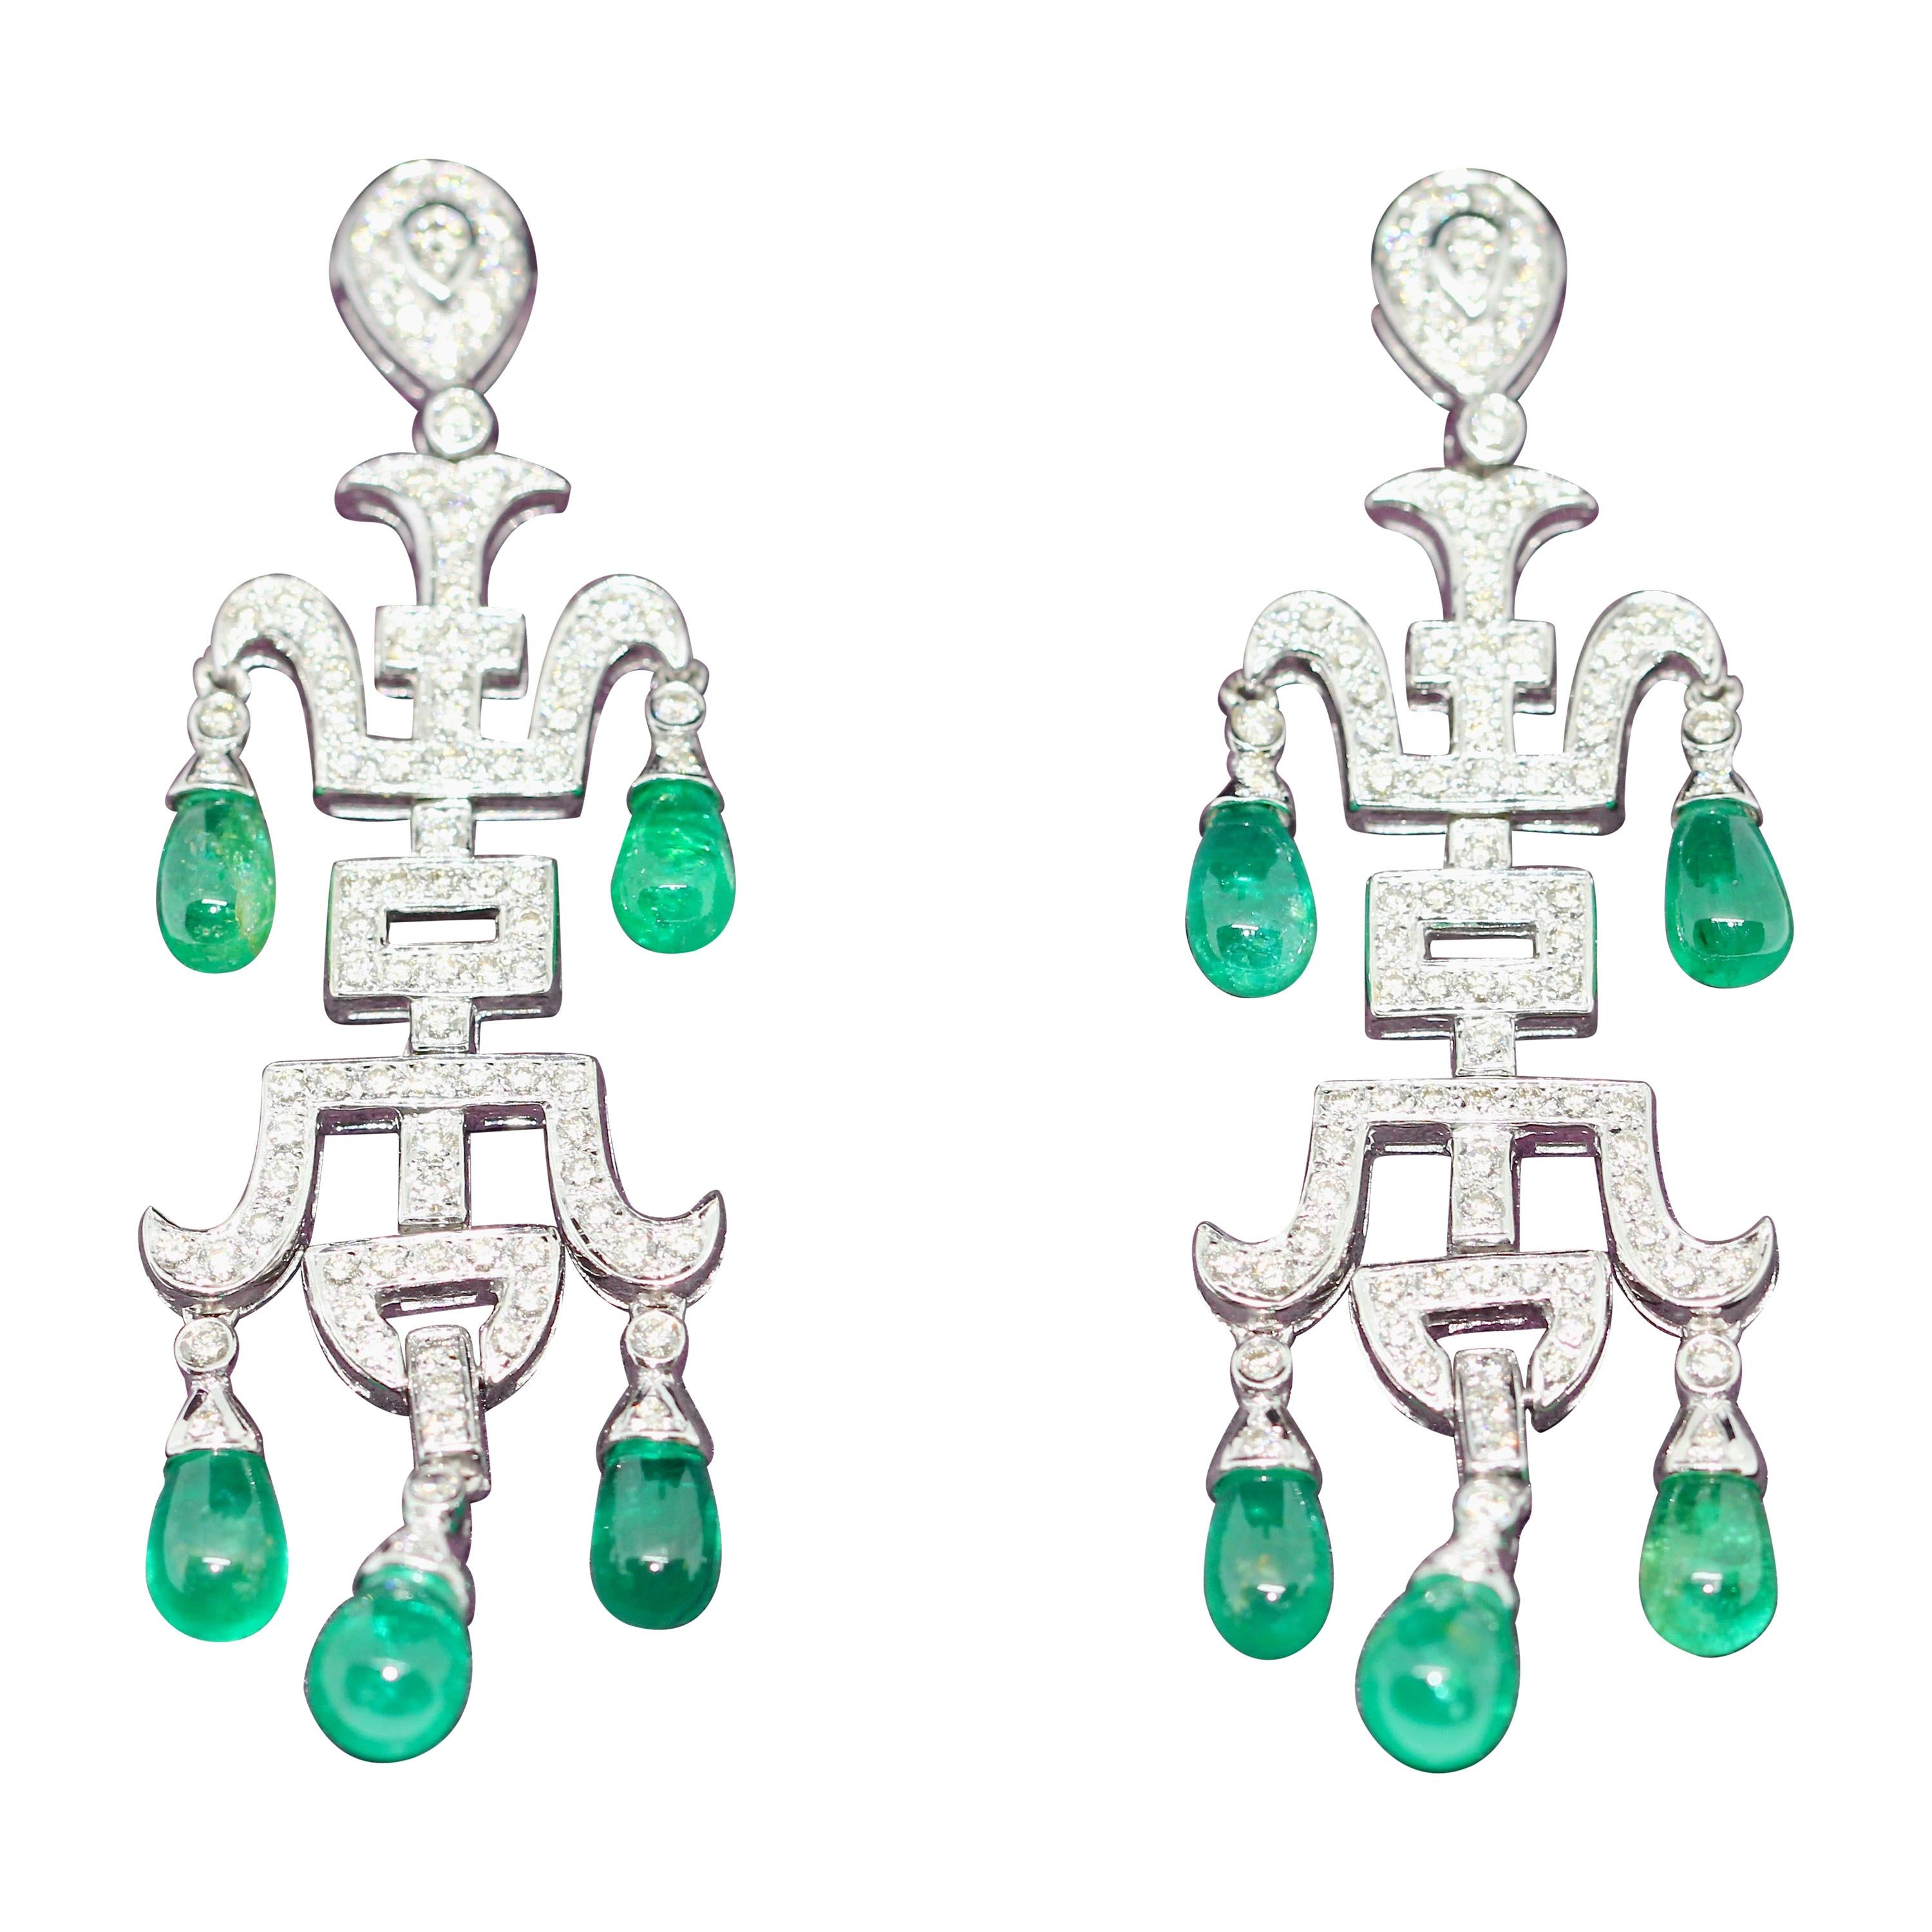 Pair of Ladies Diamond and Emerald Chandelier Earrings, 18 Karat White Gold